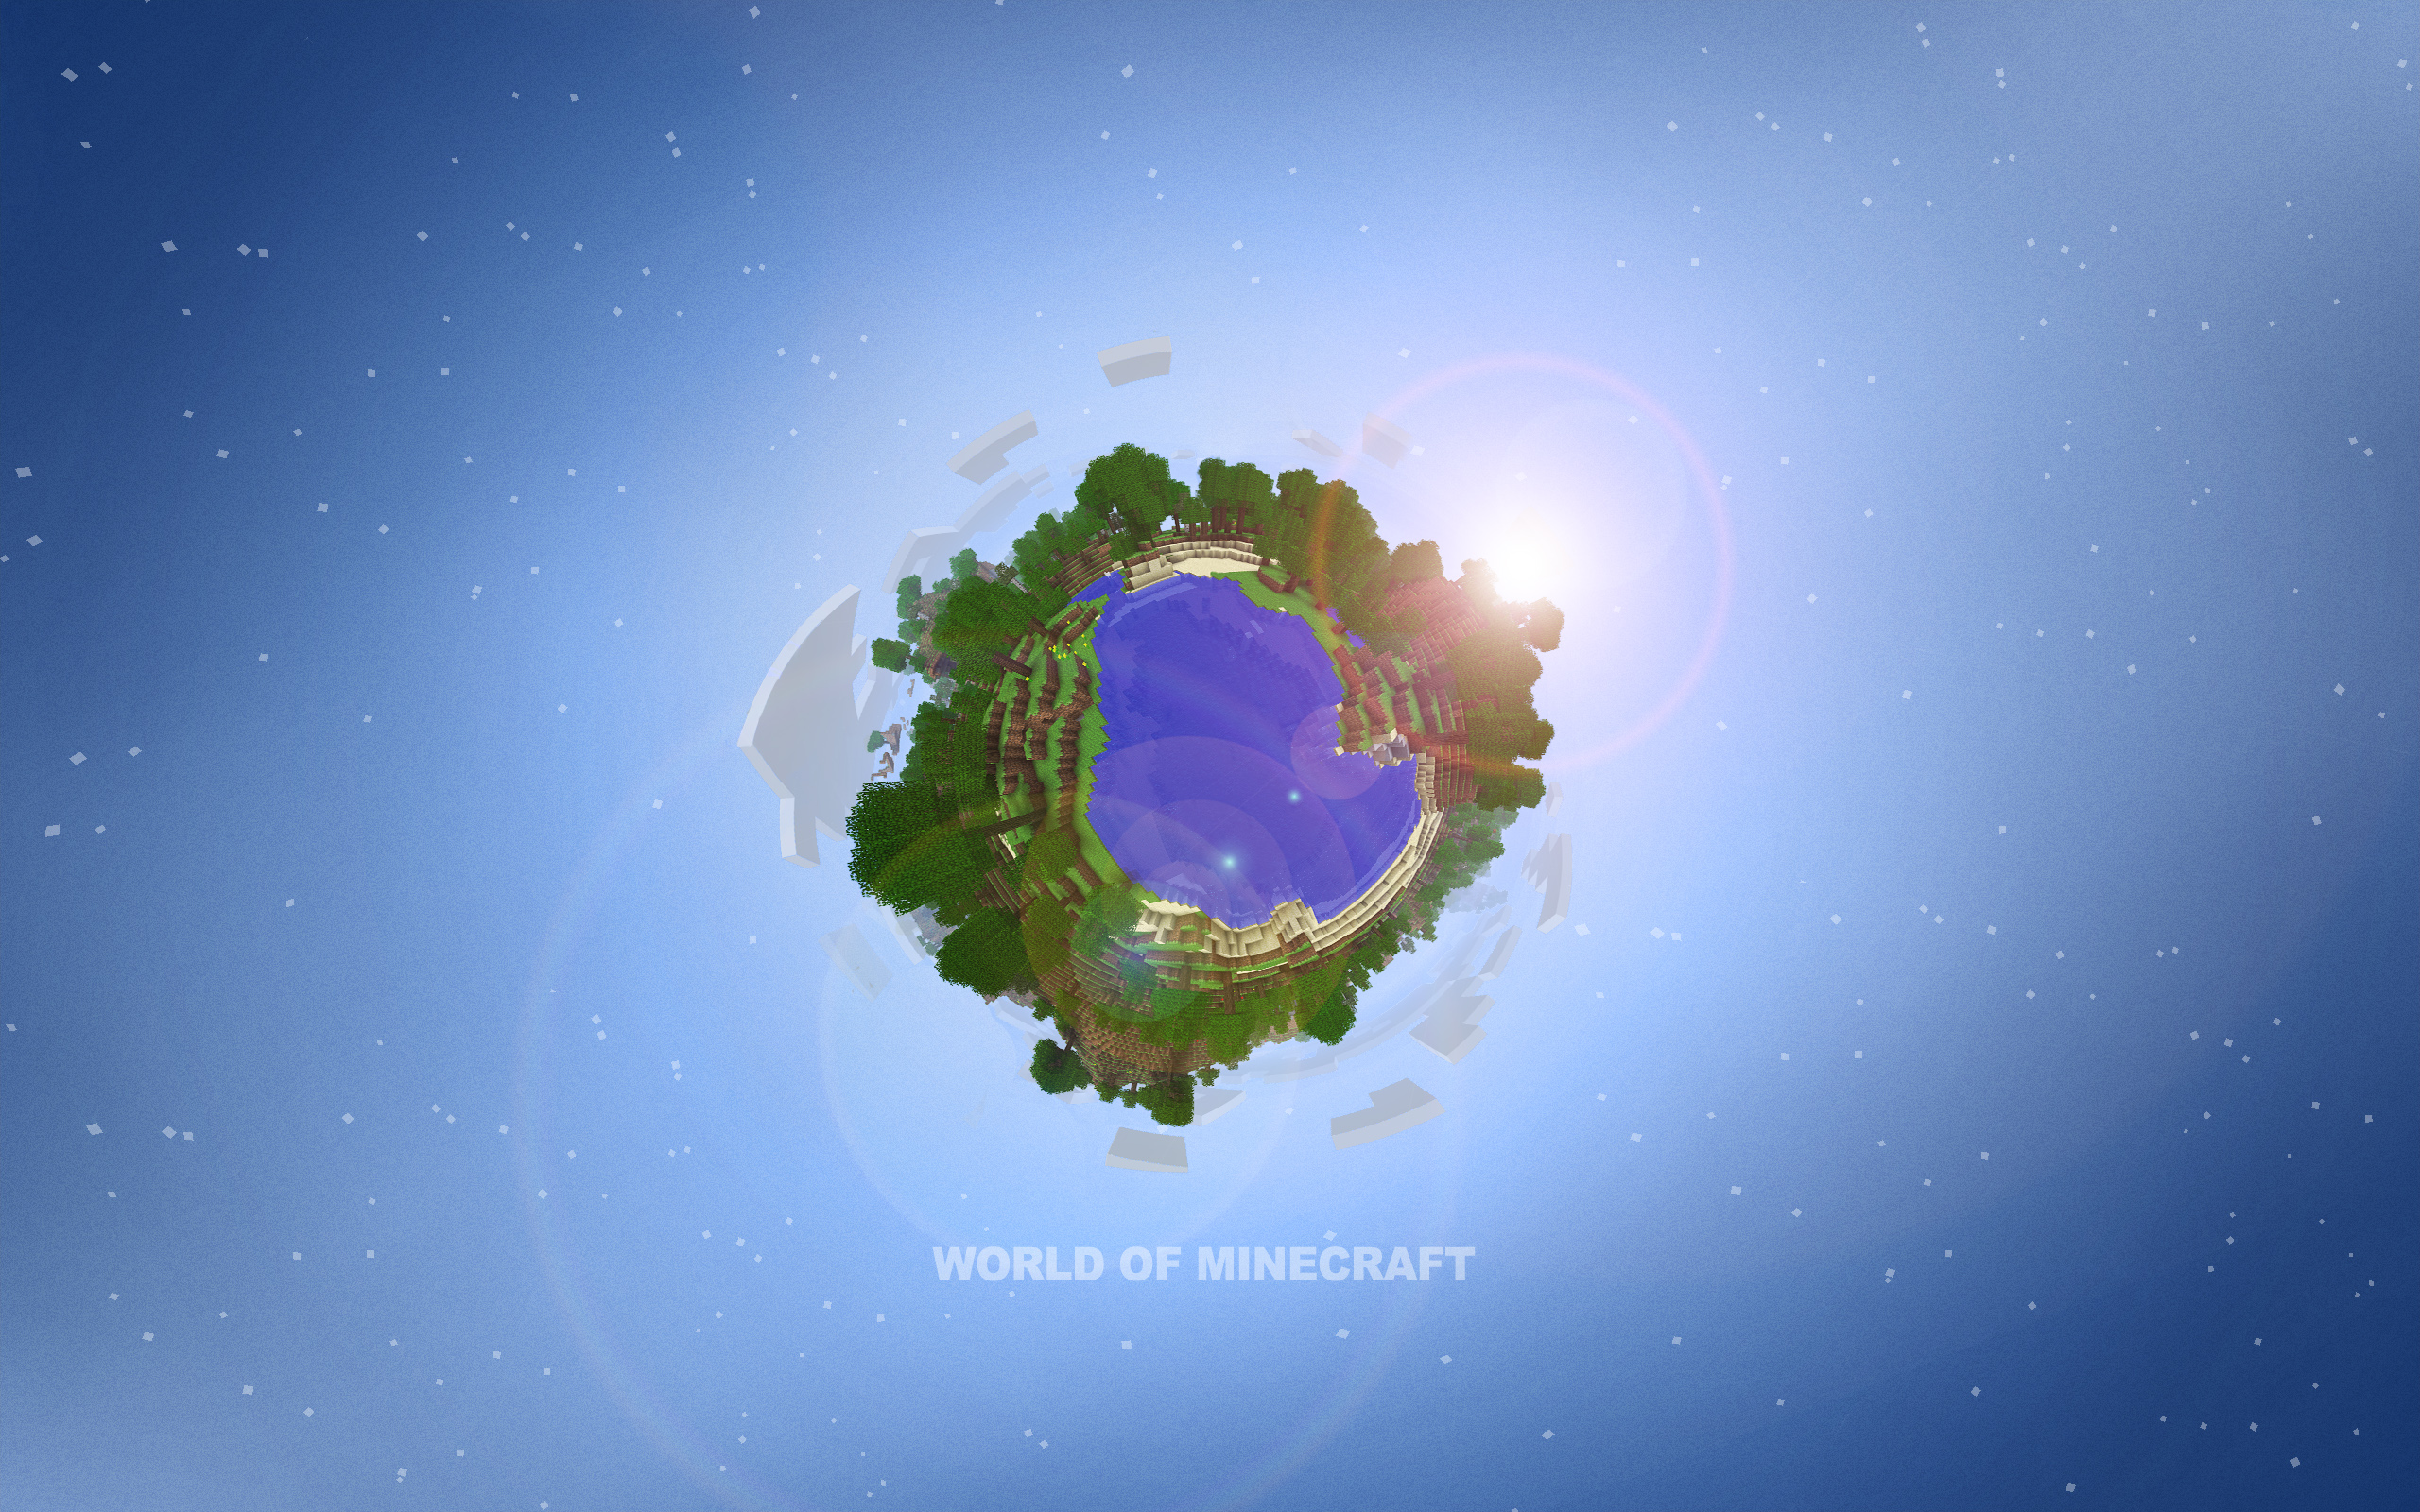 World of Minecraft Wallpaper Image